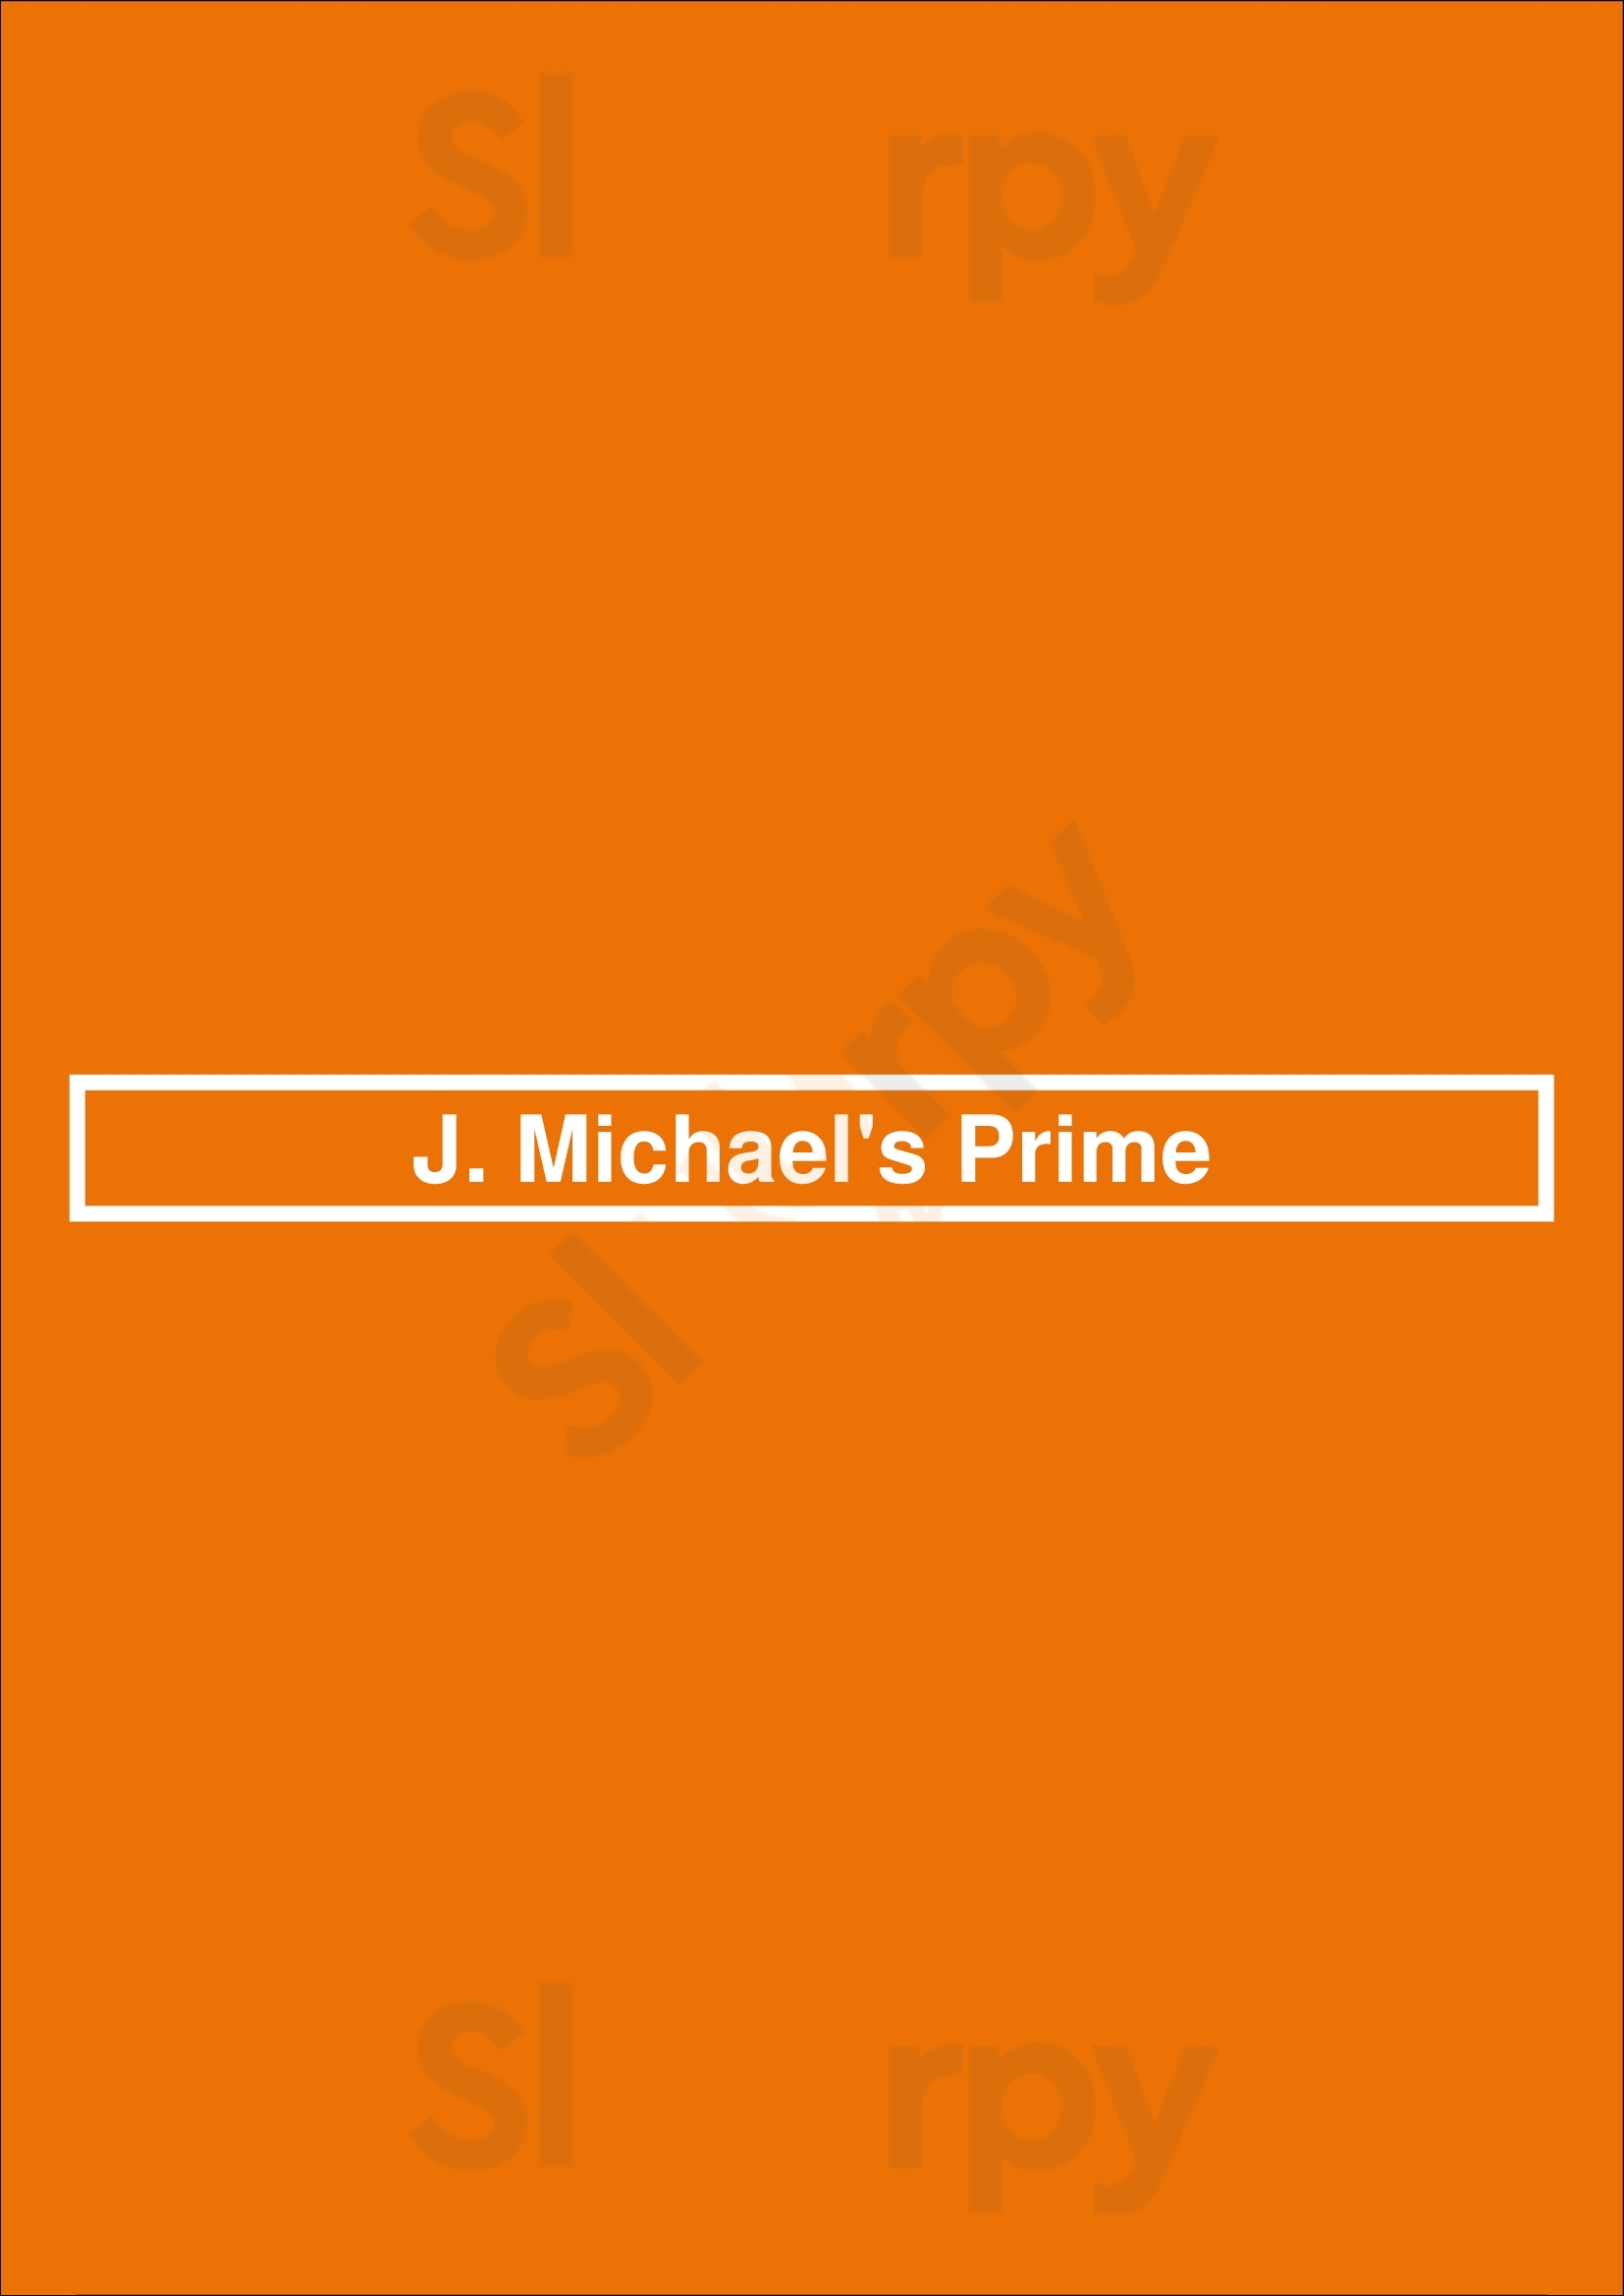 J. Michael's Prime Canton Menu - 1